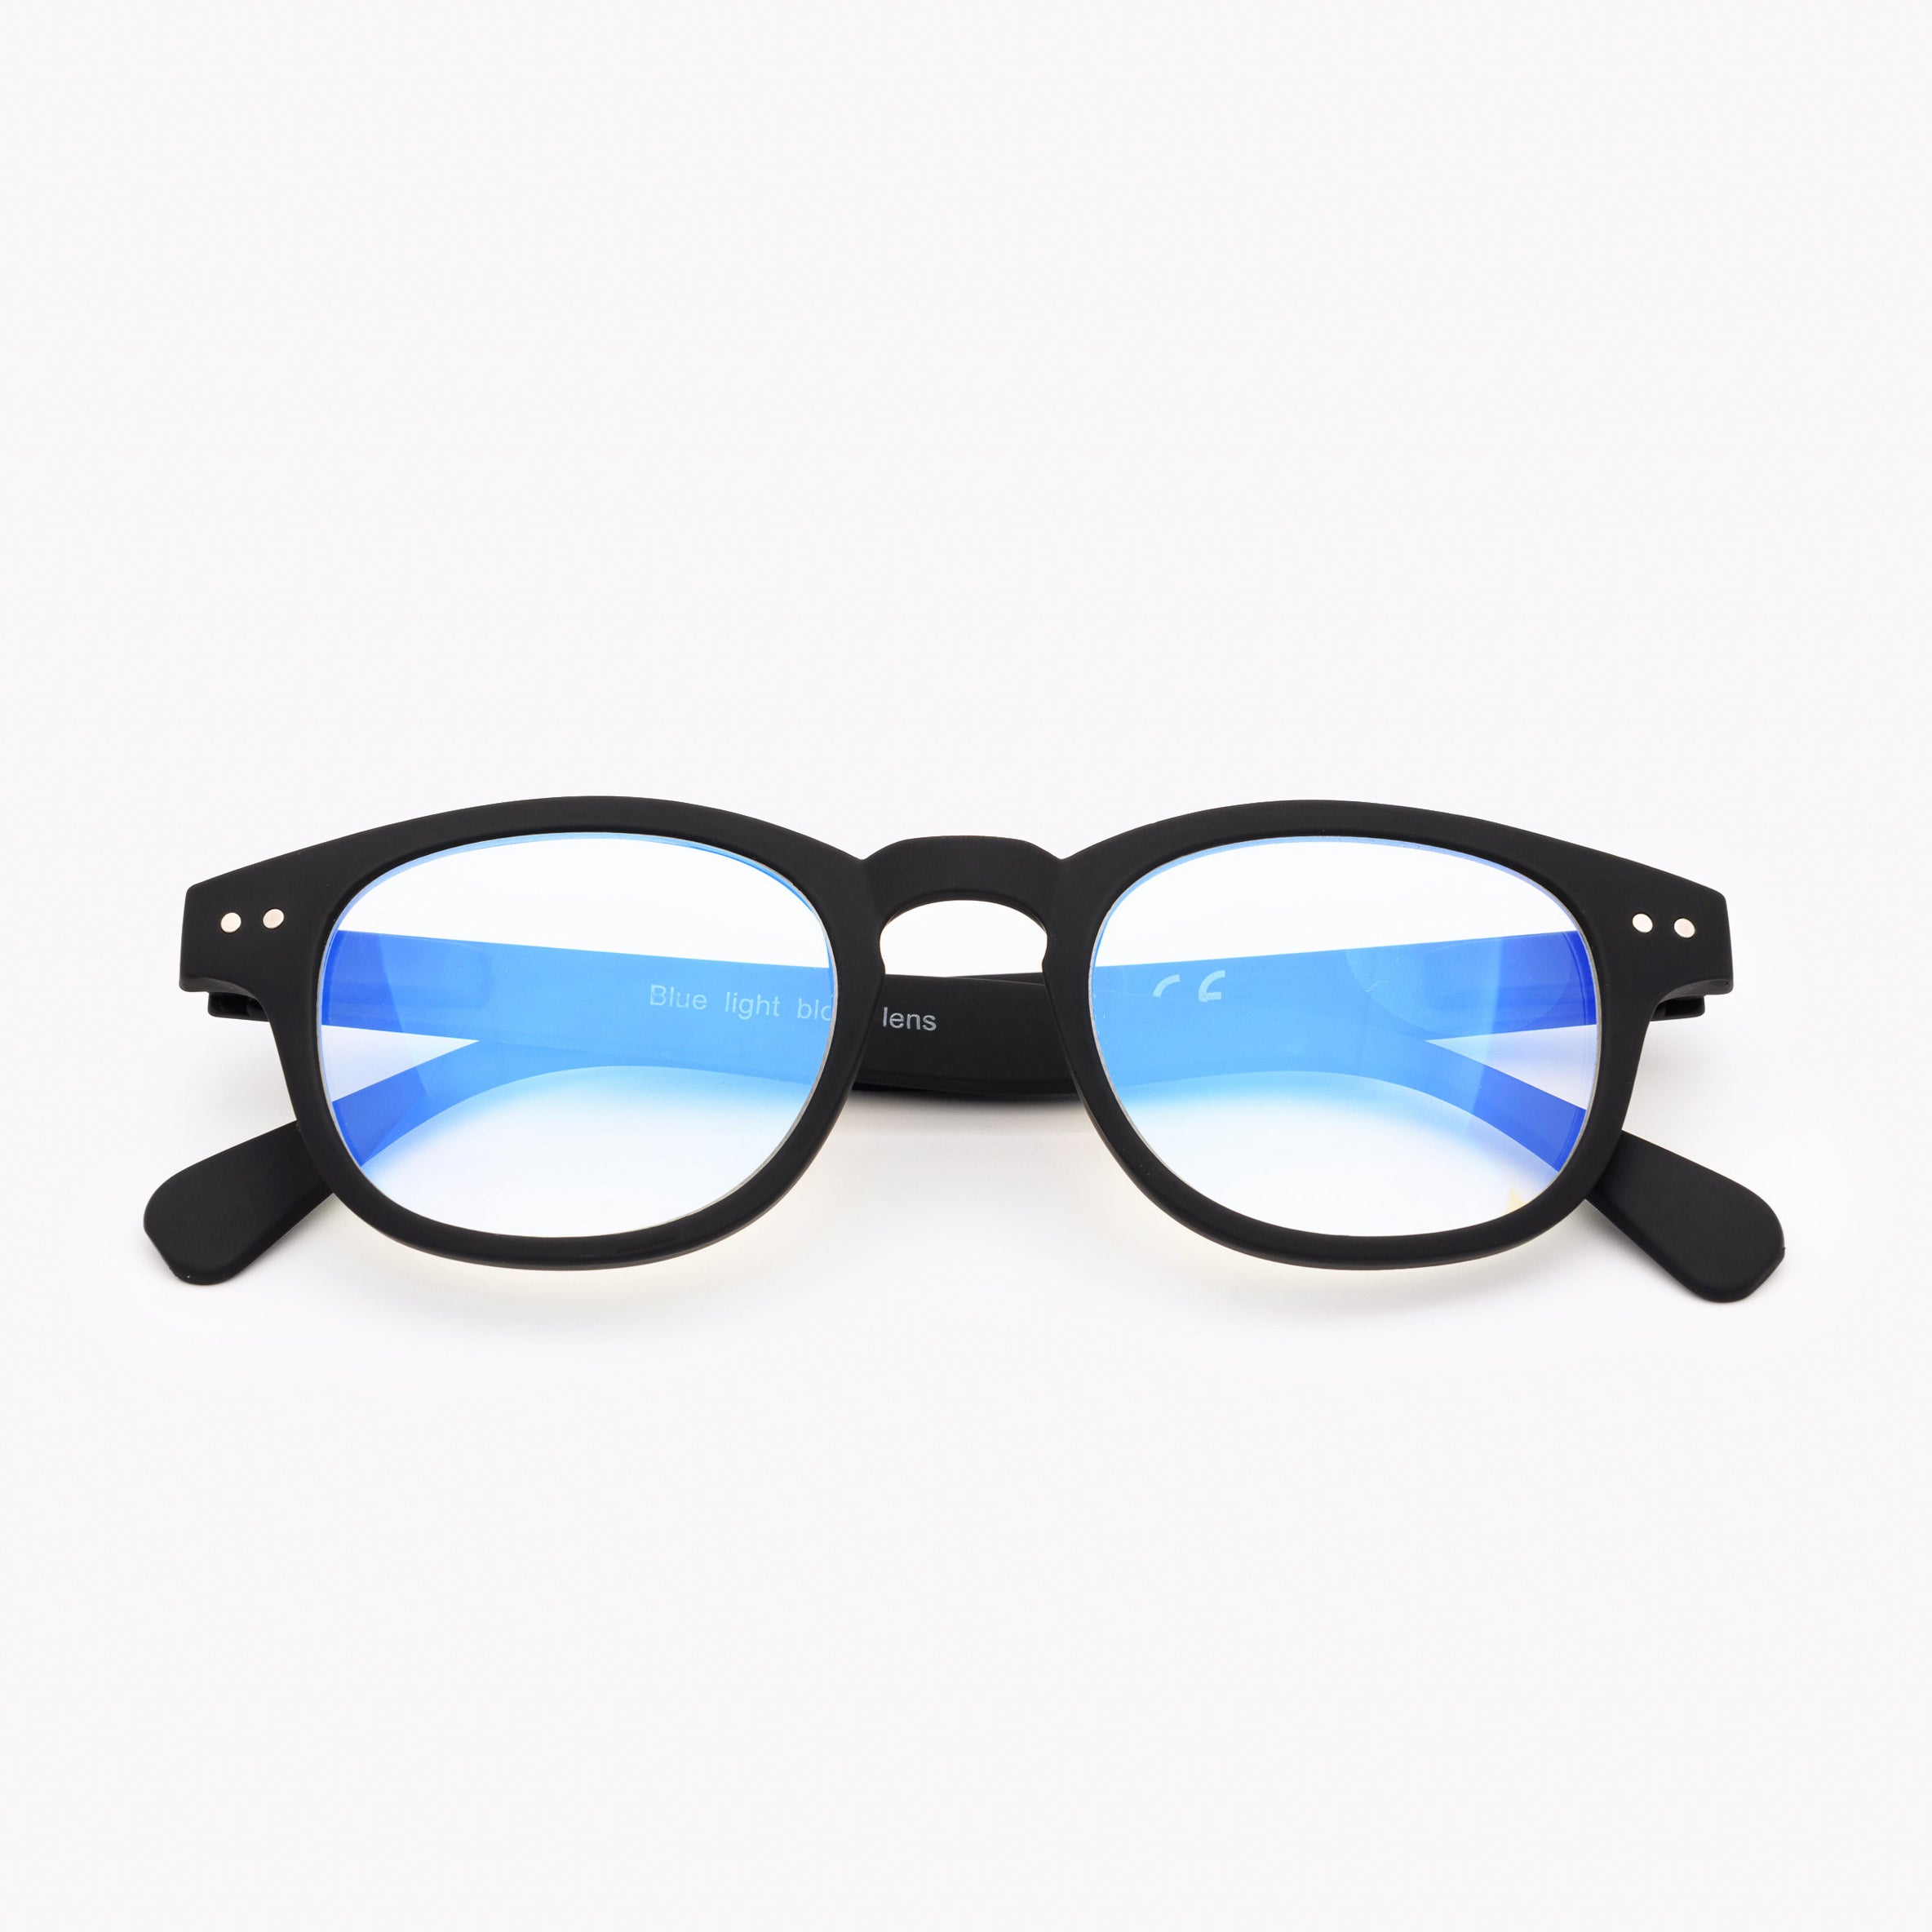 Blue light blocking glasses wayfarer black